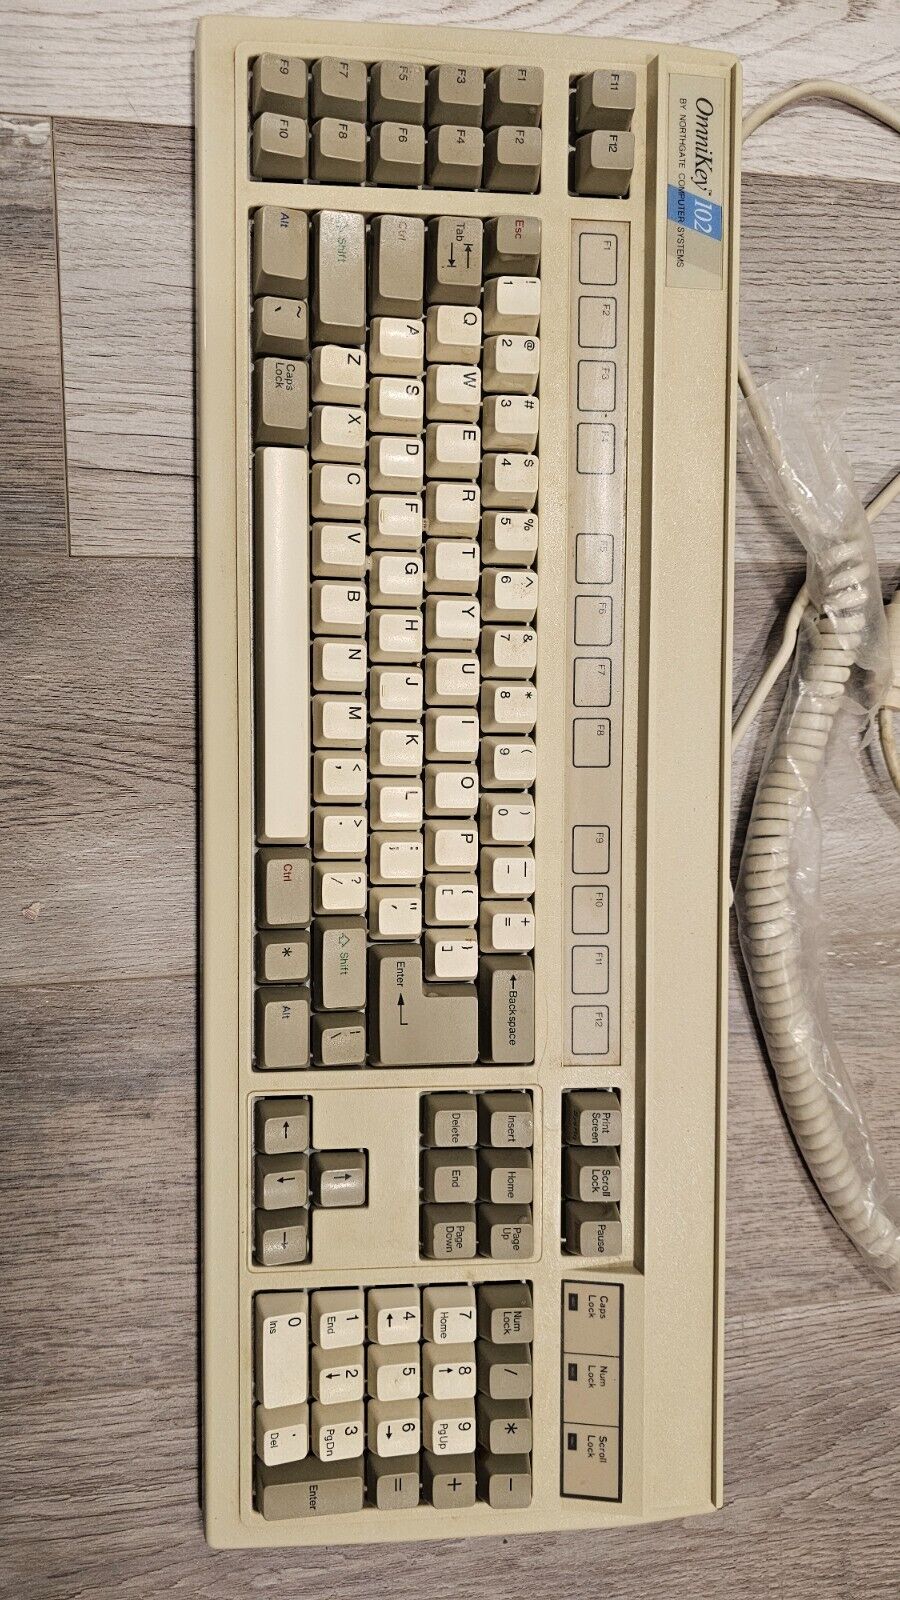 Northgate OmniKey 102 Vintage Keyboard